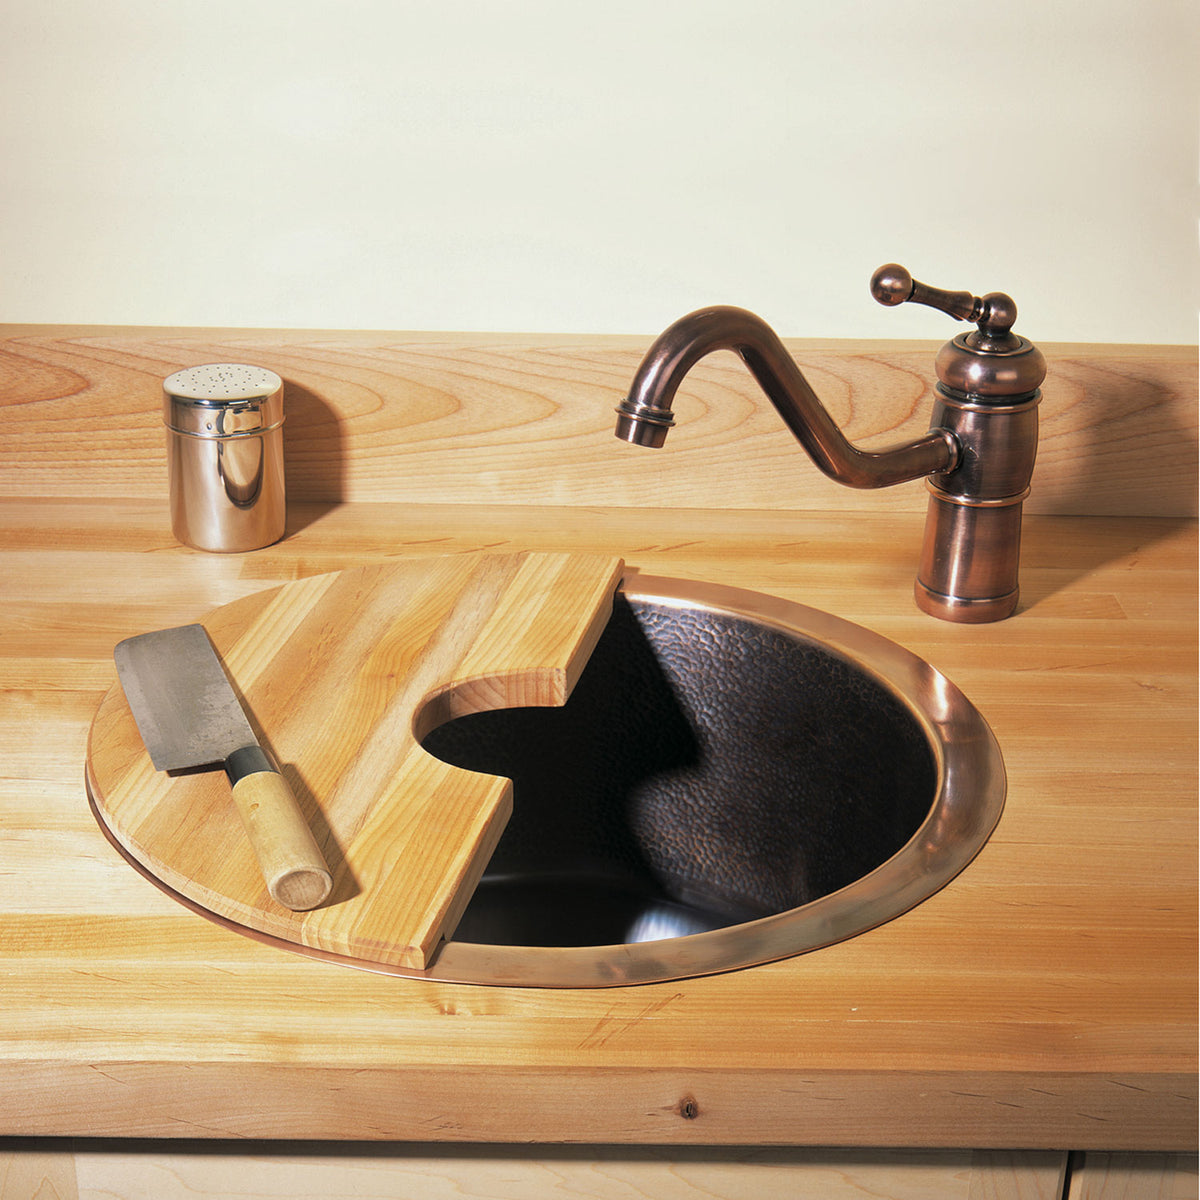 Copper Veggie Sink image 1 of 1